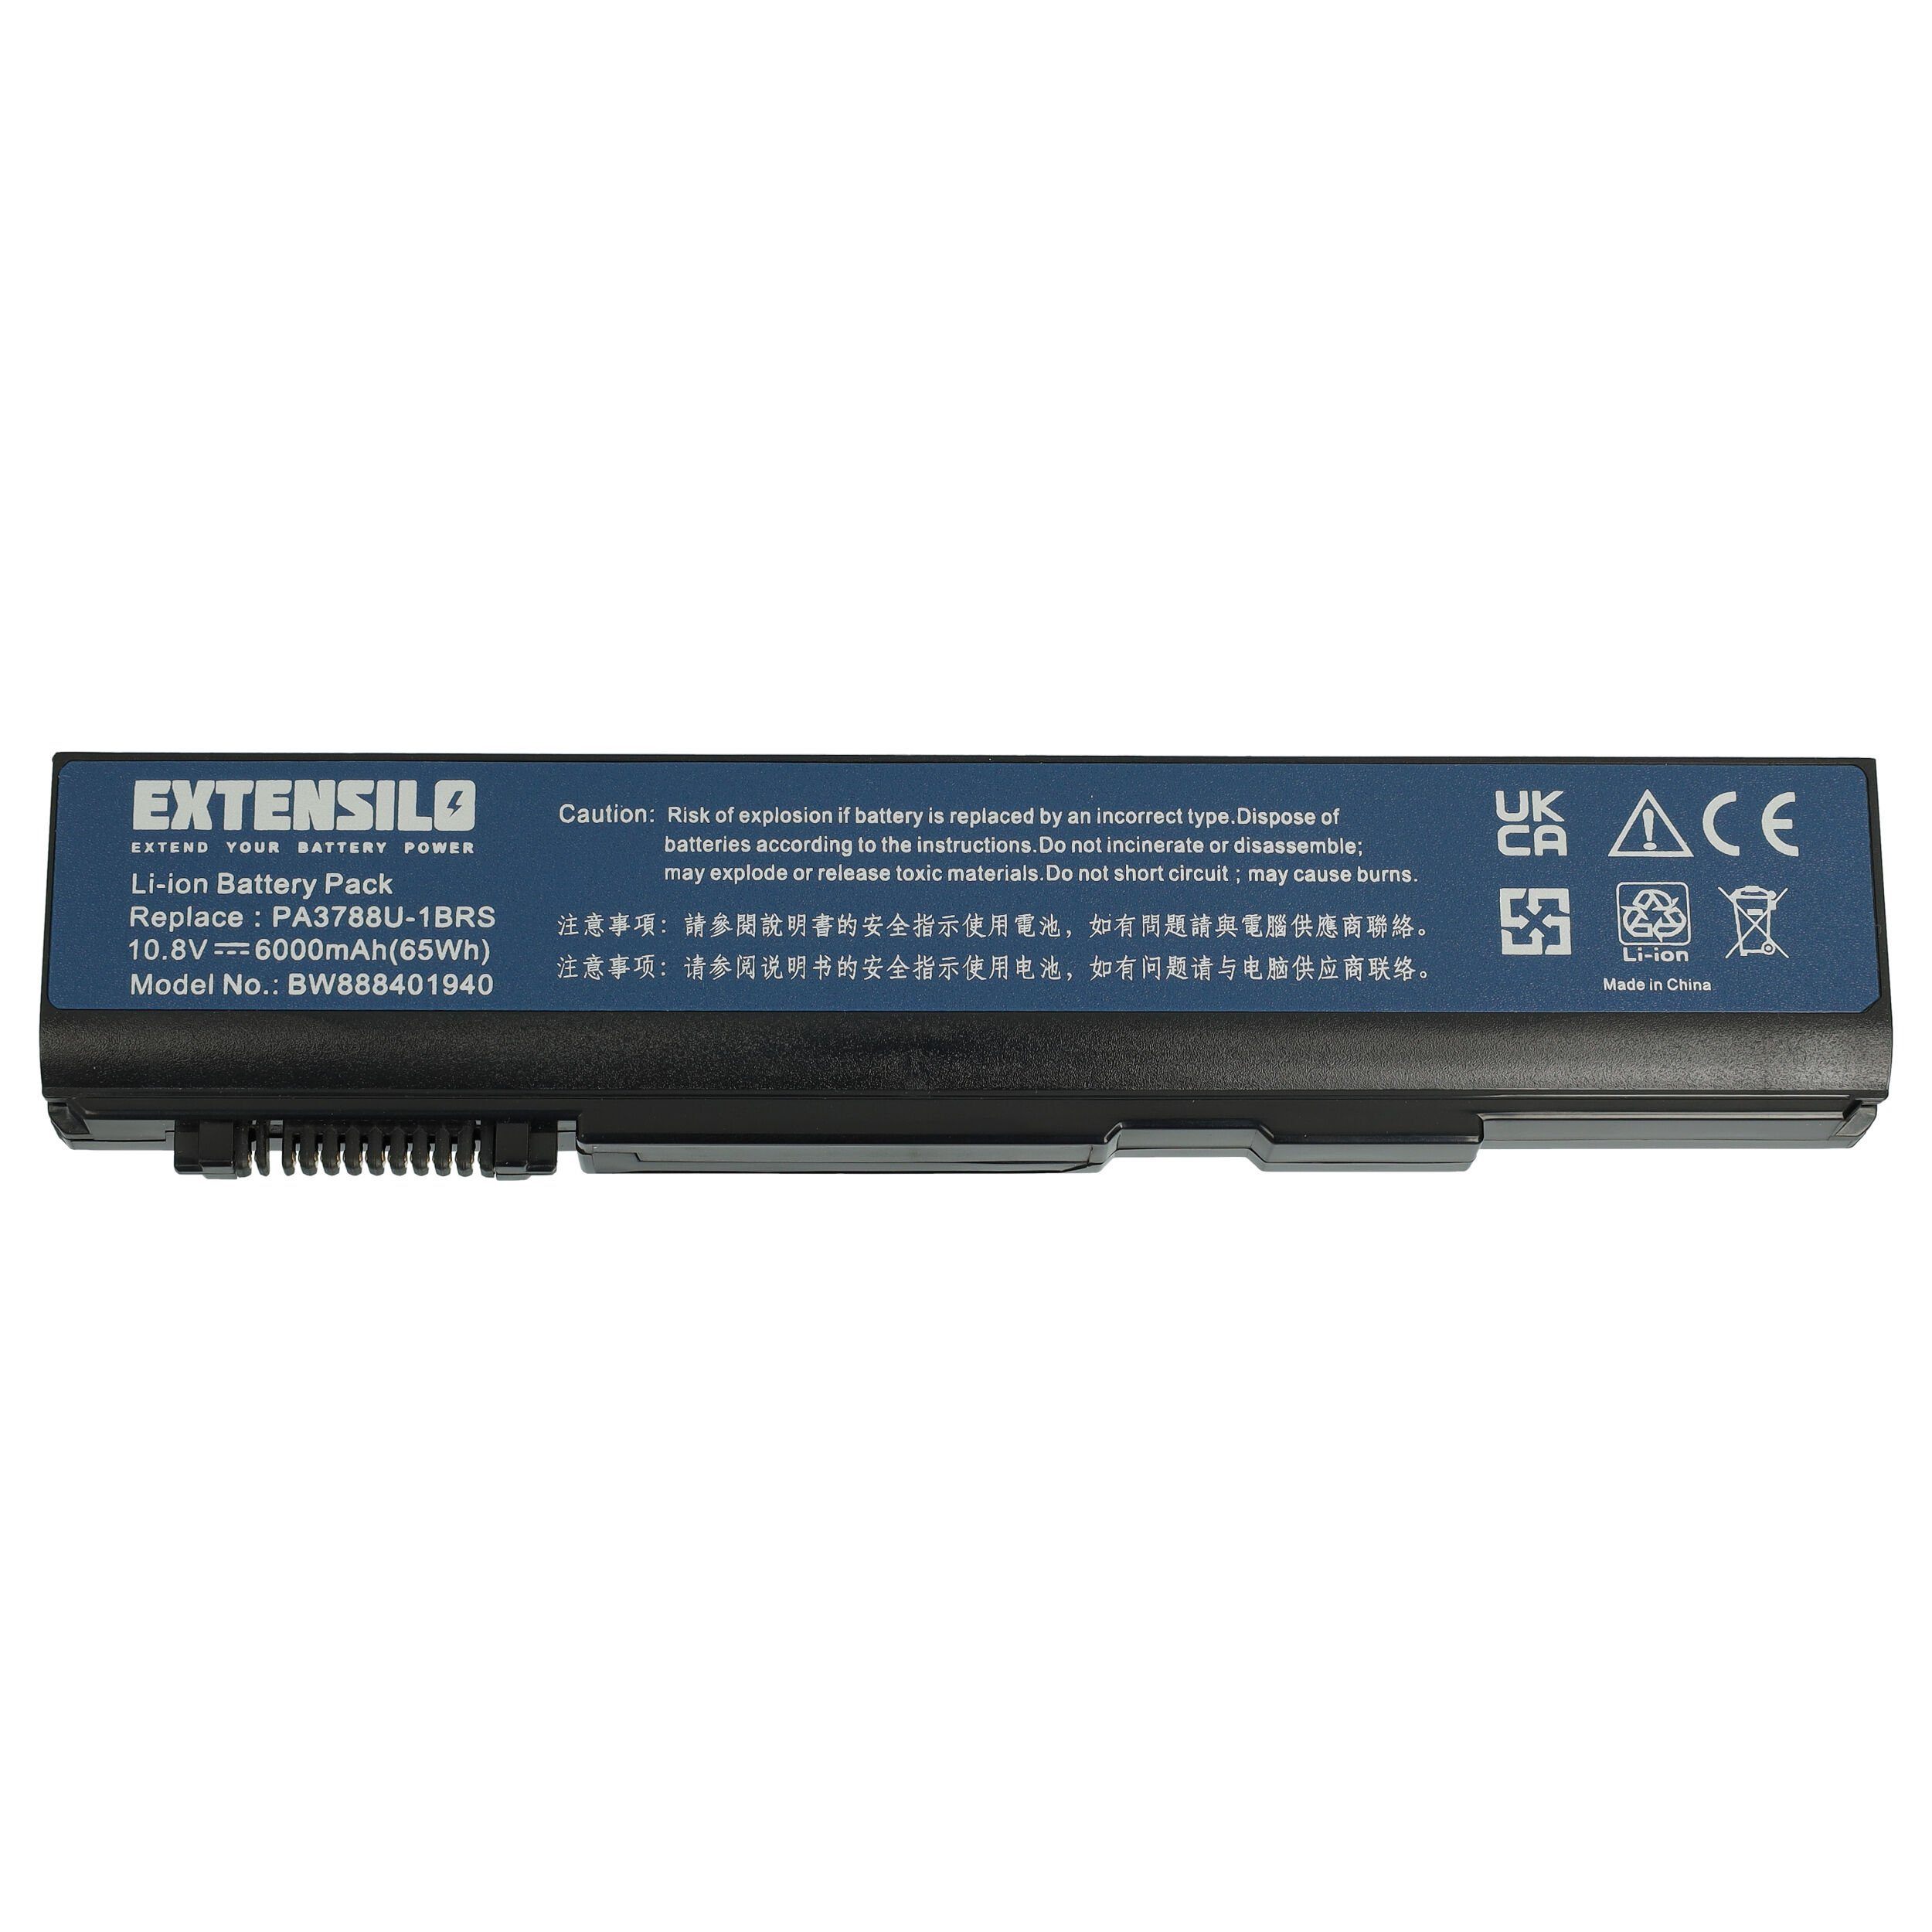 Extensilo kompatibel mit Toshiba Dynabook Satellite PB651CBPNKEA51 Laptop-Akku Li-Ion 6000 mAh (10,8 V)